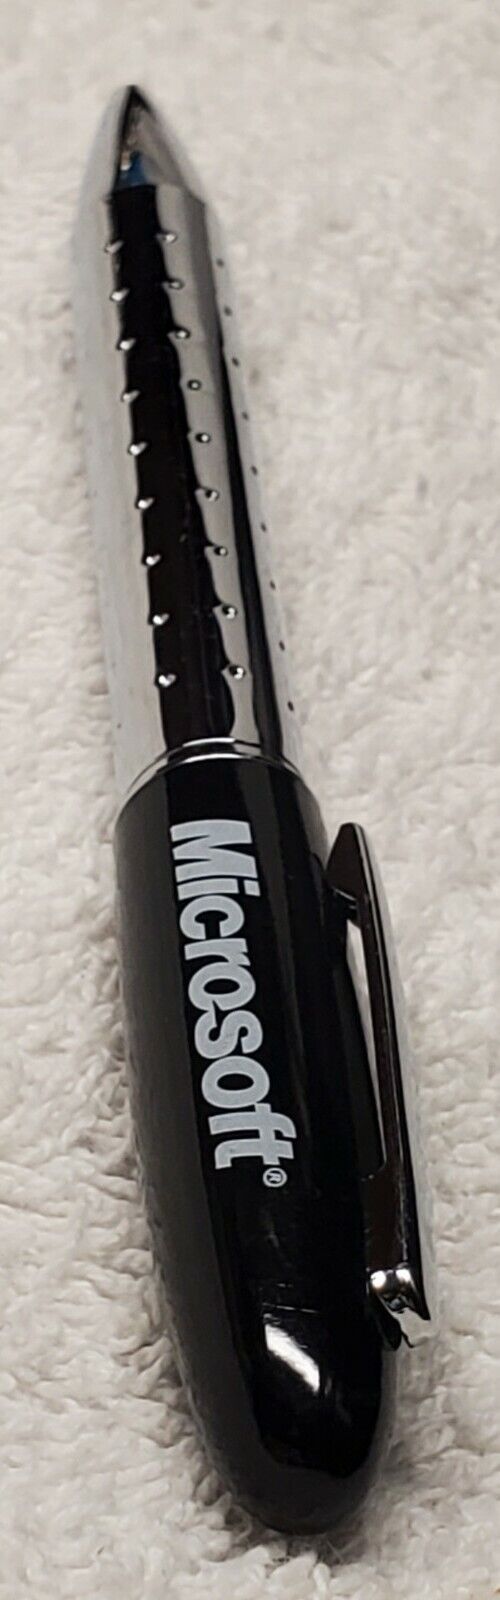 Vtg 1999 Microsoft Promo Advertising Refillable Black/Silver Ink Pen Technology